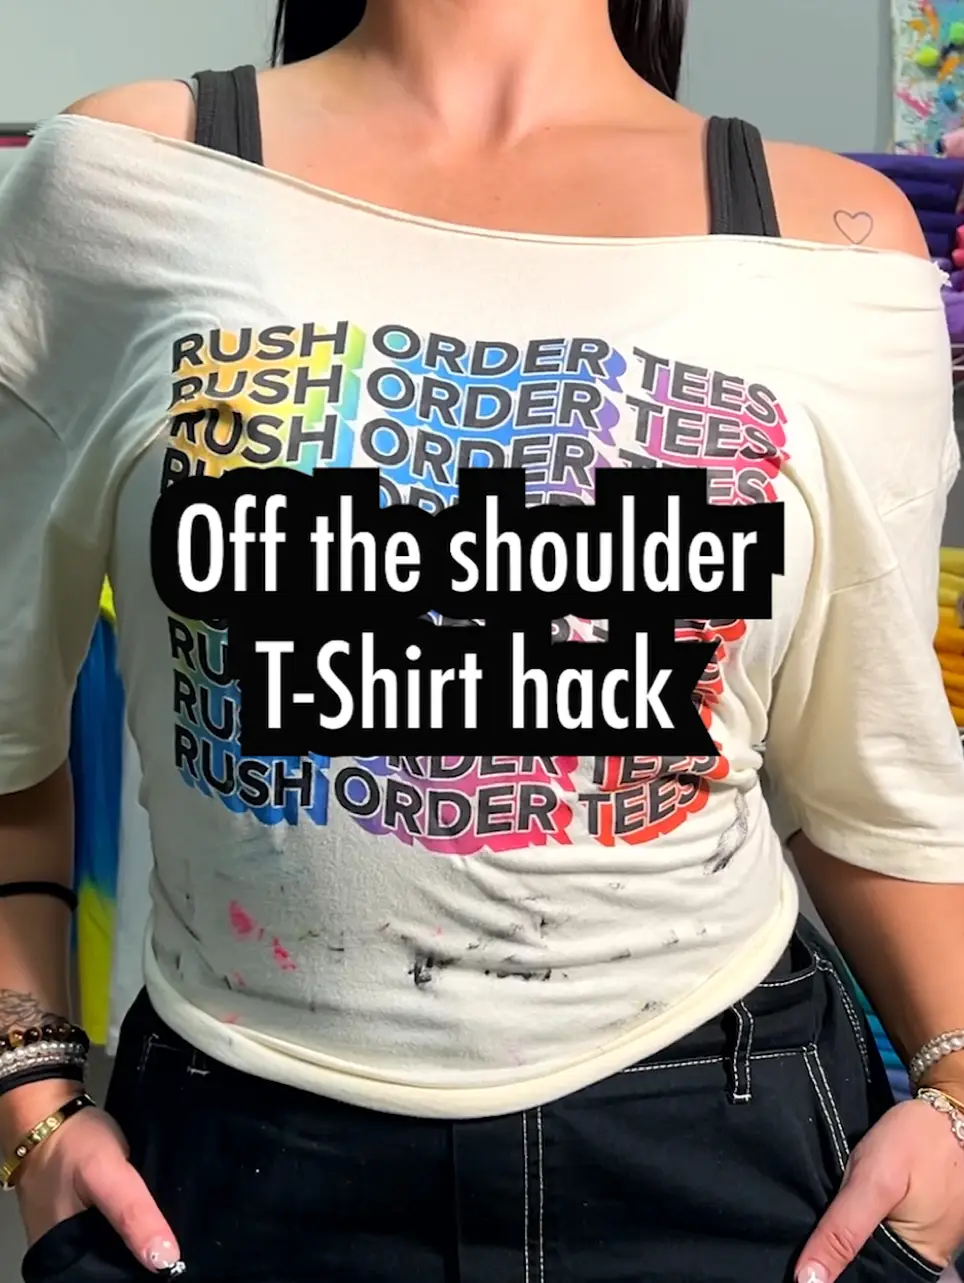 Off the Shoulder T-shirt Hack! 👚🤯, Video published by RushOrderTees